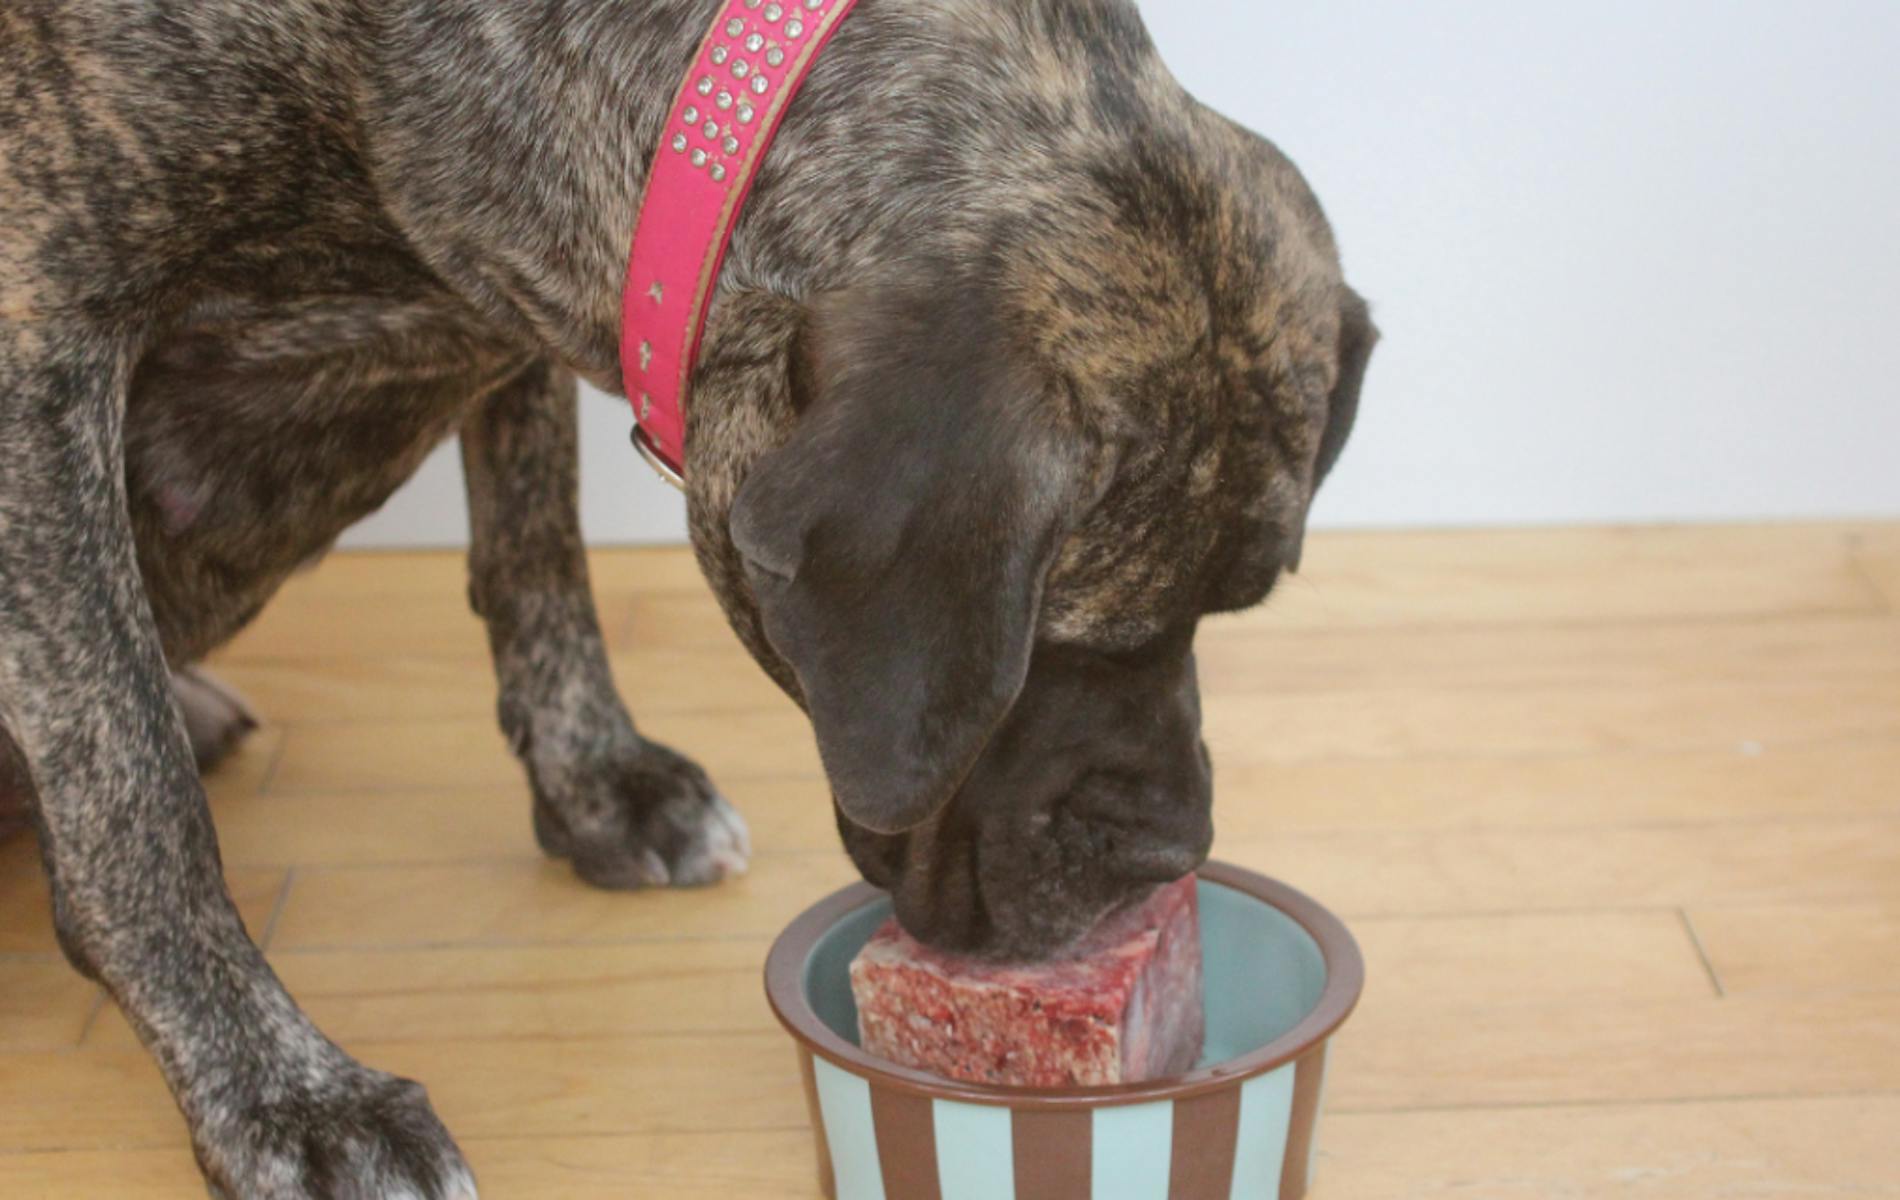 Dog eating raw food